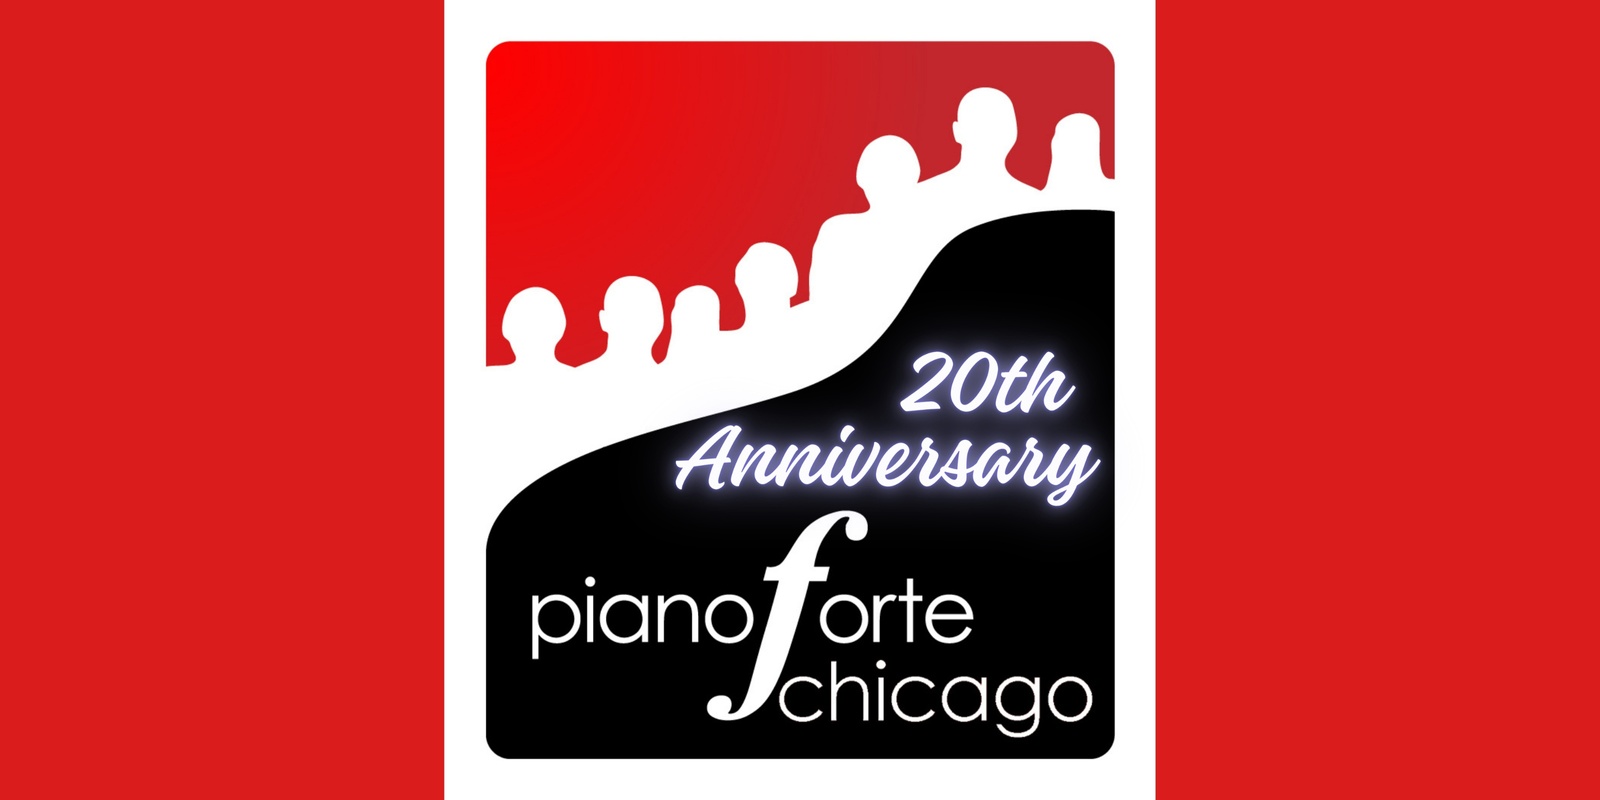 Banner image for 20th Anniversary Celebration Concert